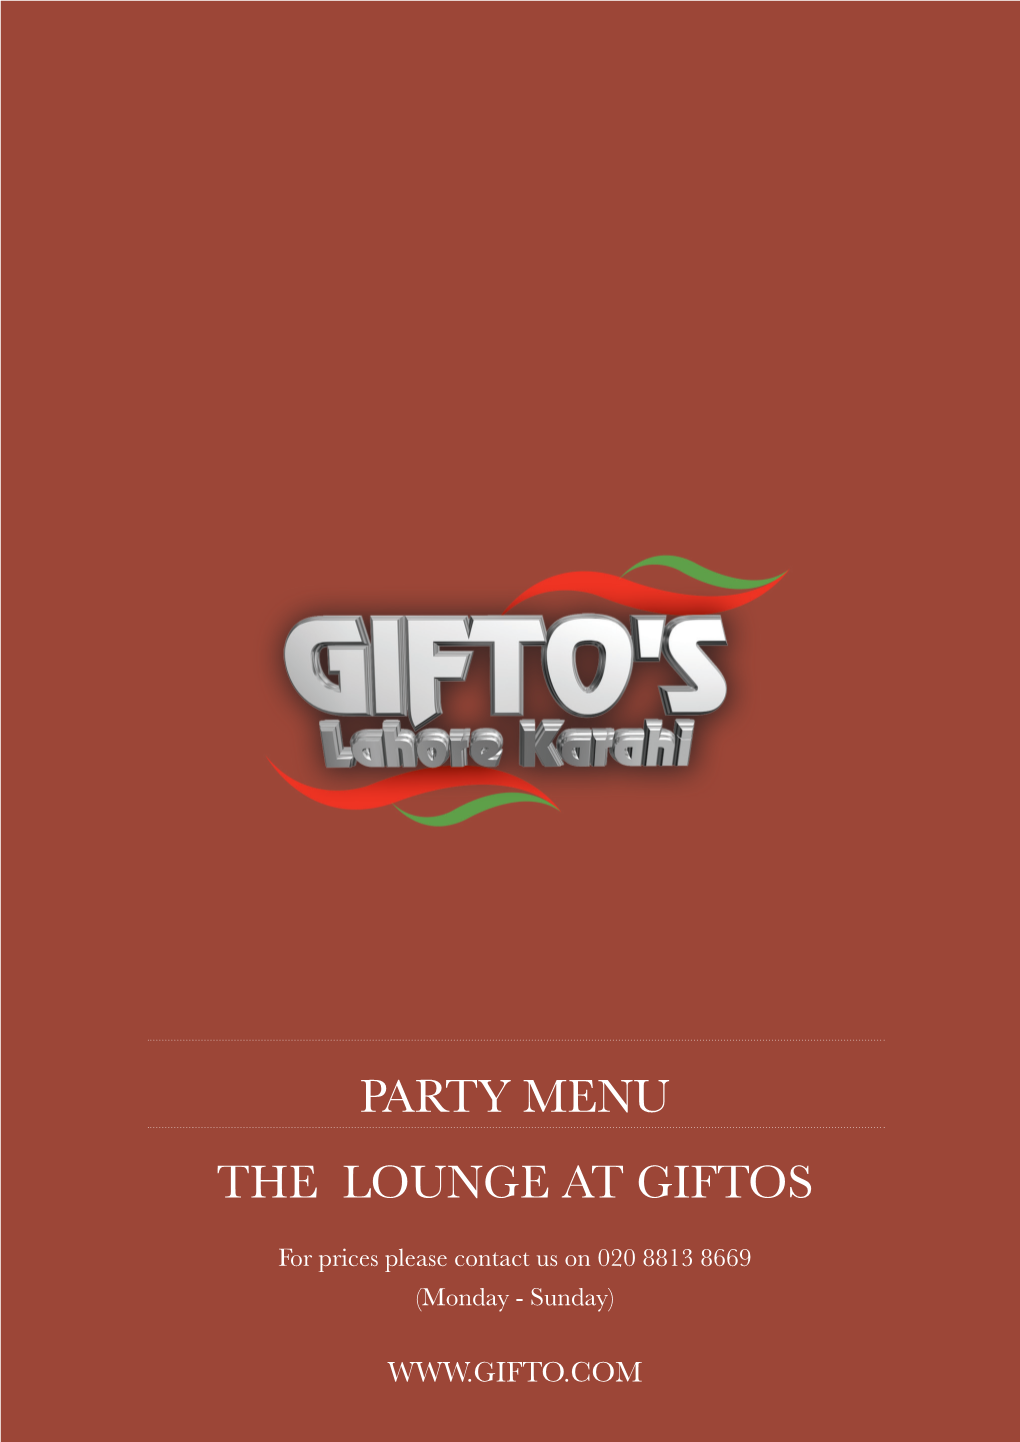 Party Menu the Lounge at Giftos